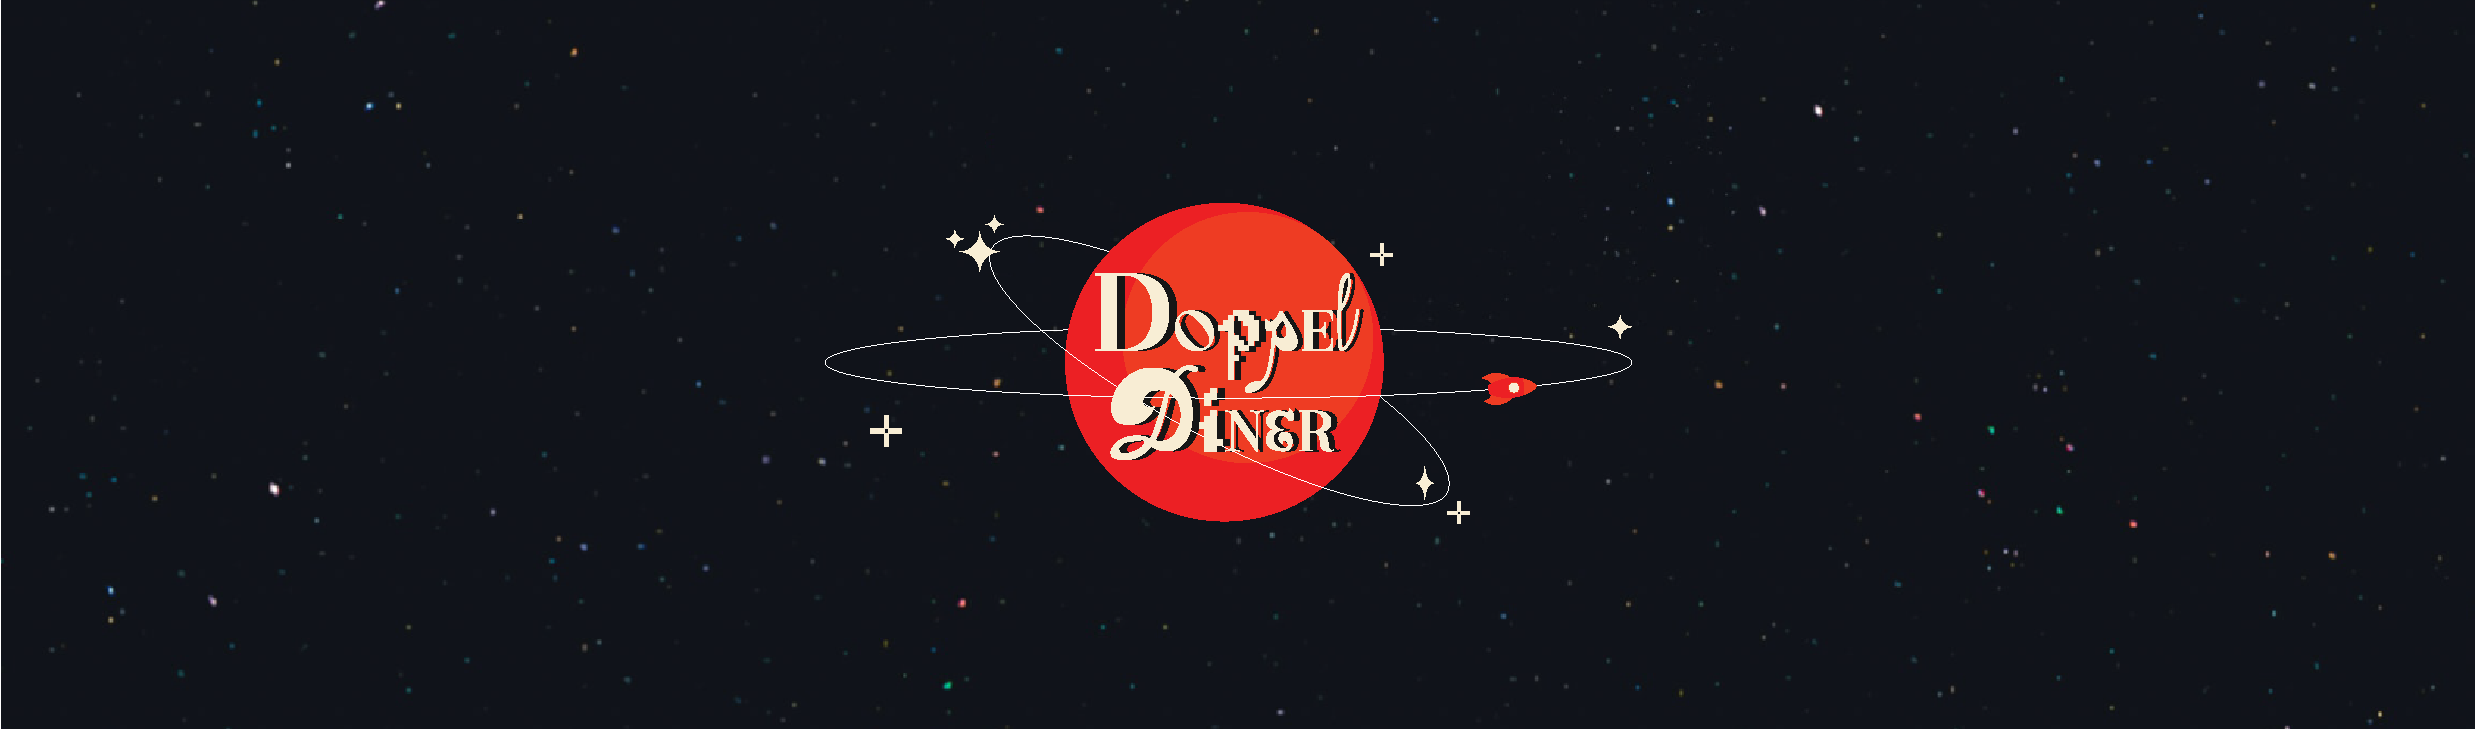 Doppel Diner (Demo)